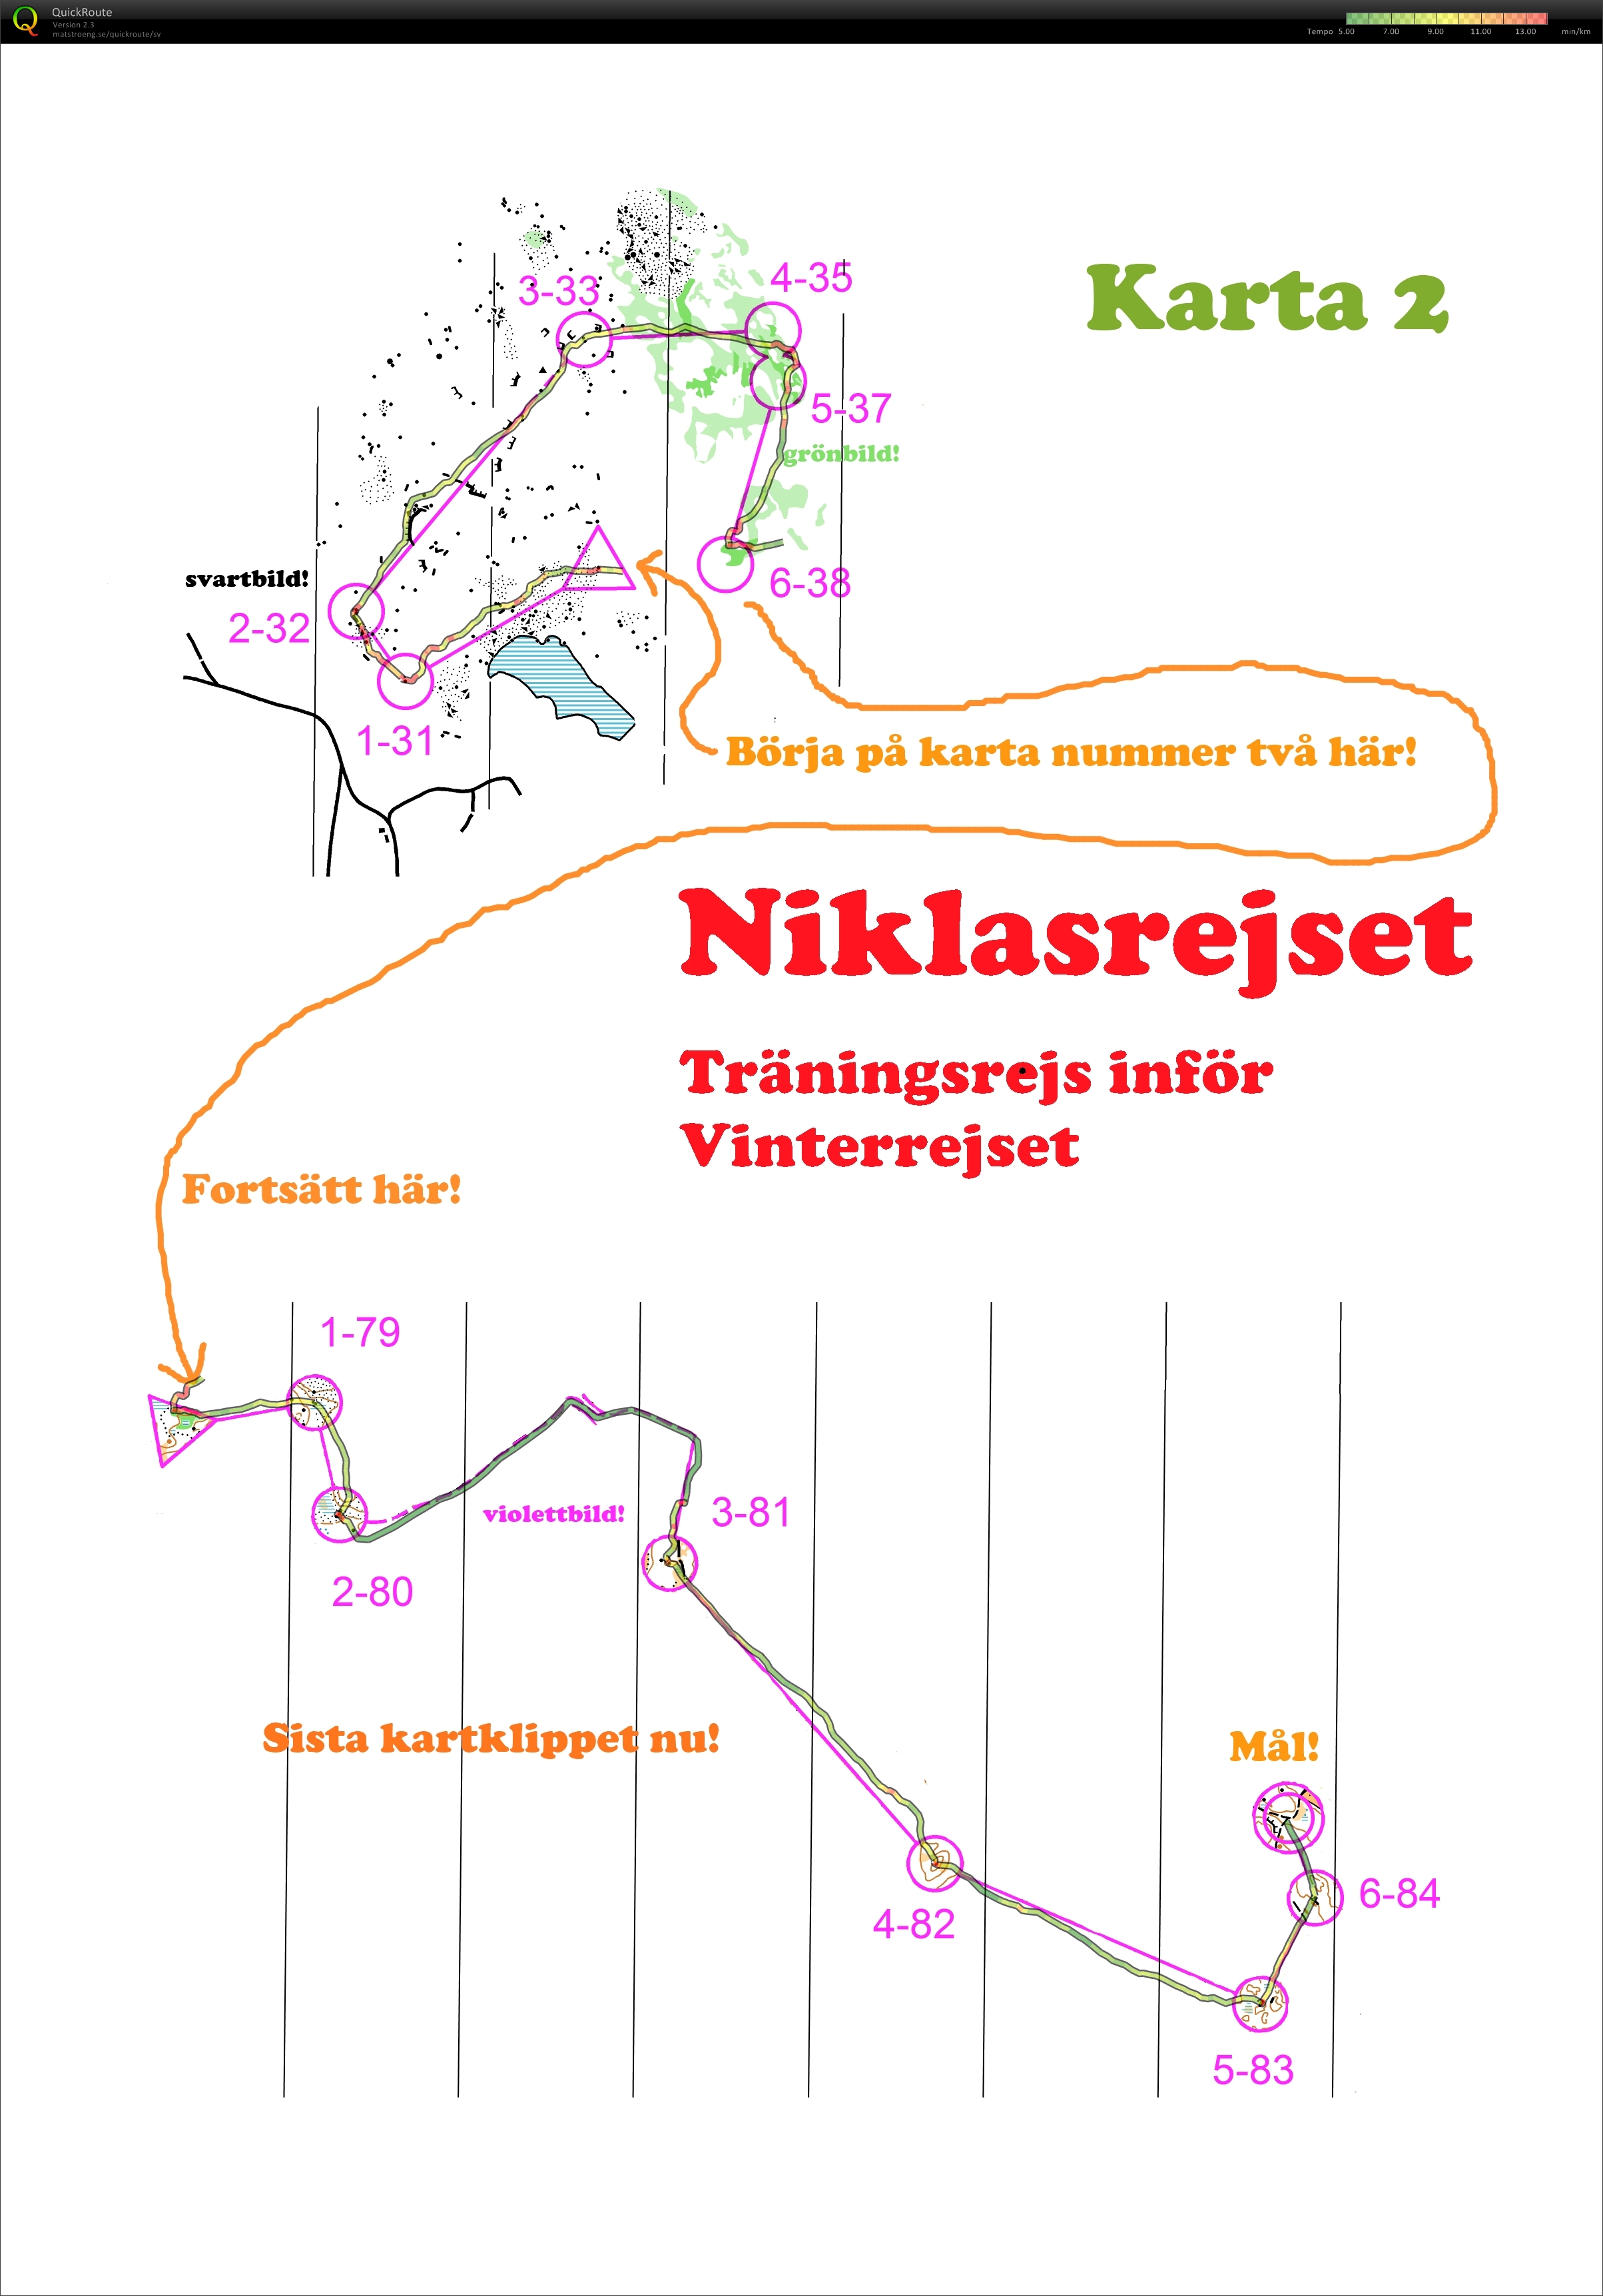 Niklasrejset - karta 2 (06-08-2011)